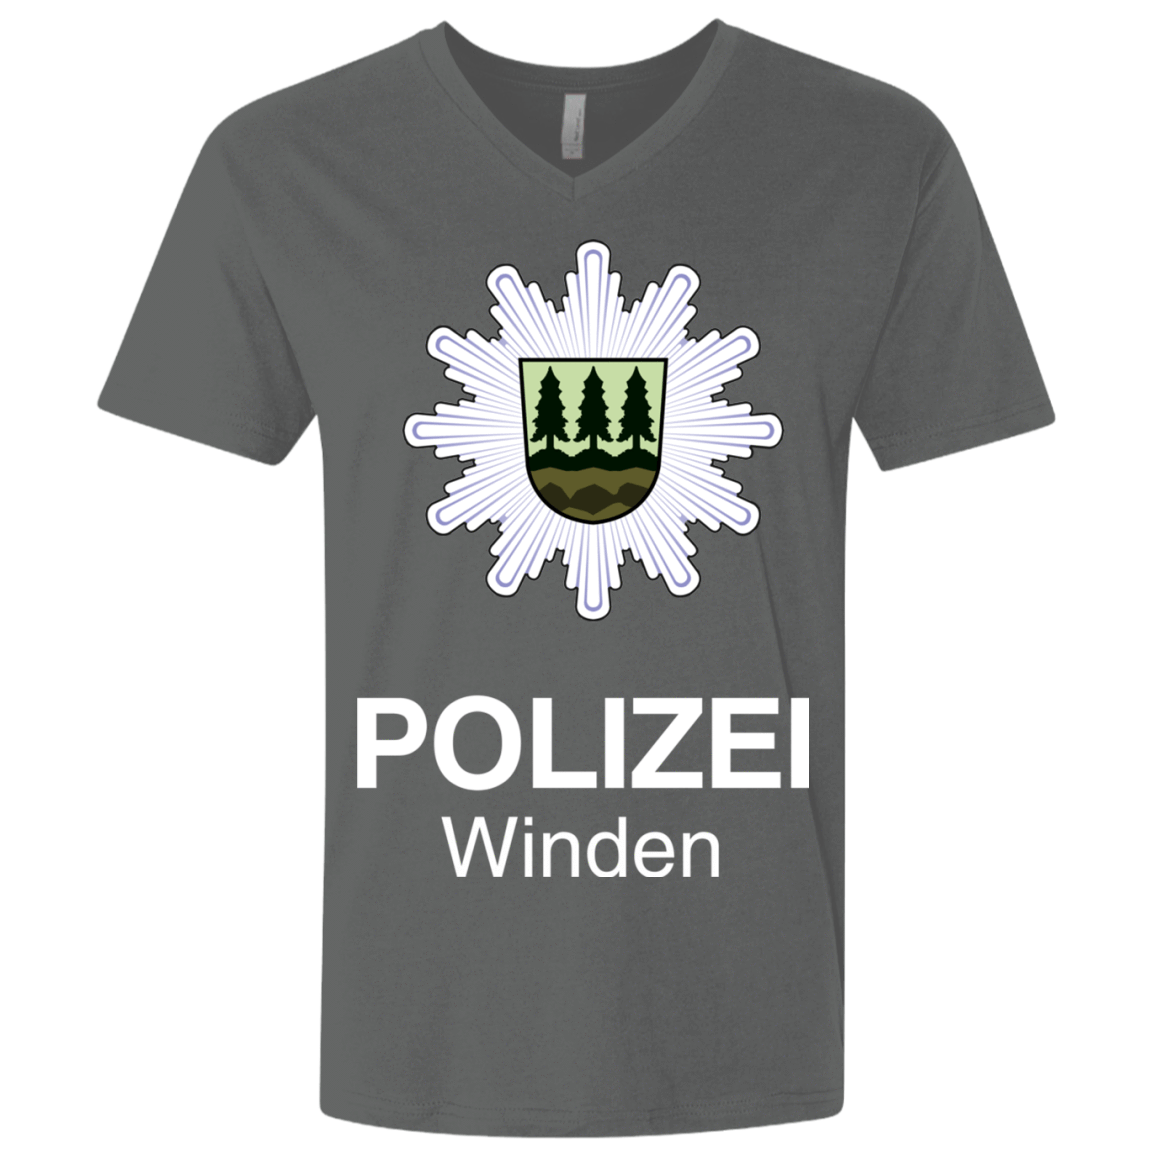 T-Shirts Heavy Metal / X-Small Winden Polizei Men's Premium V-Neck